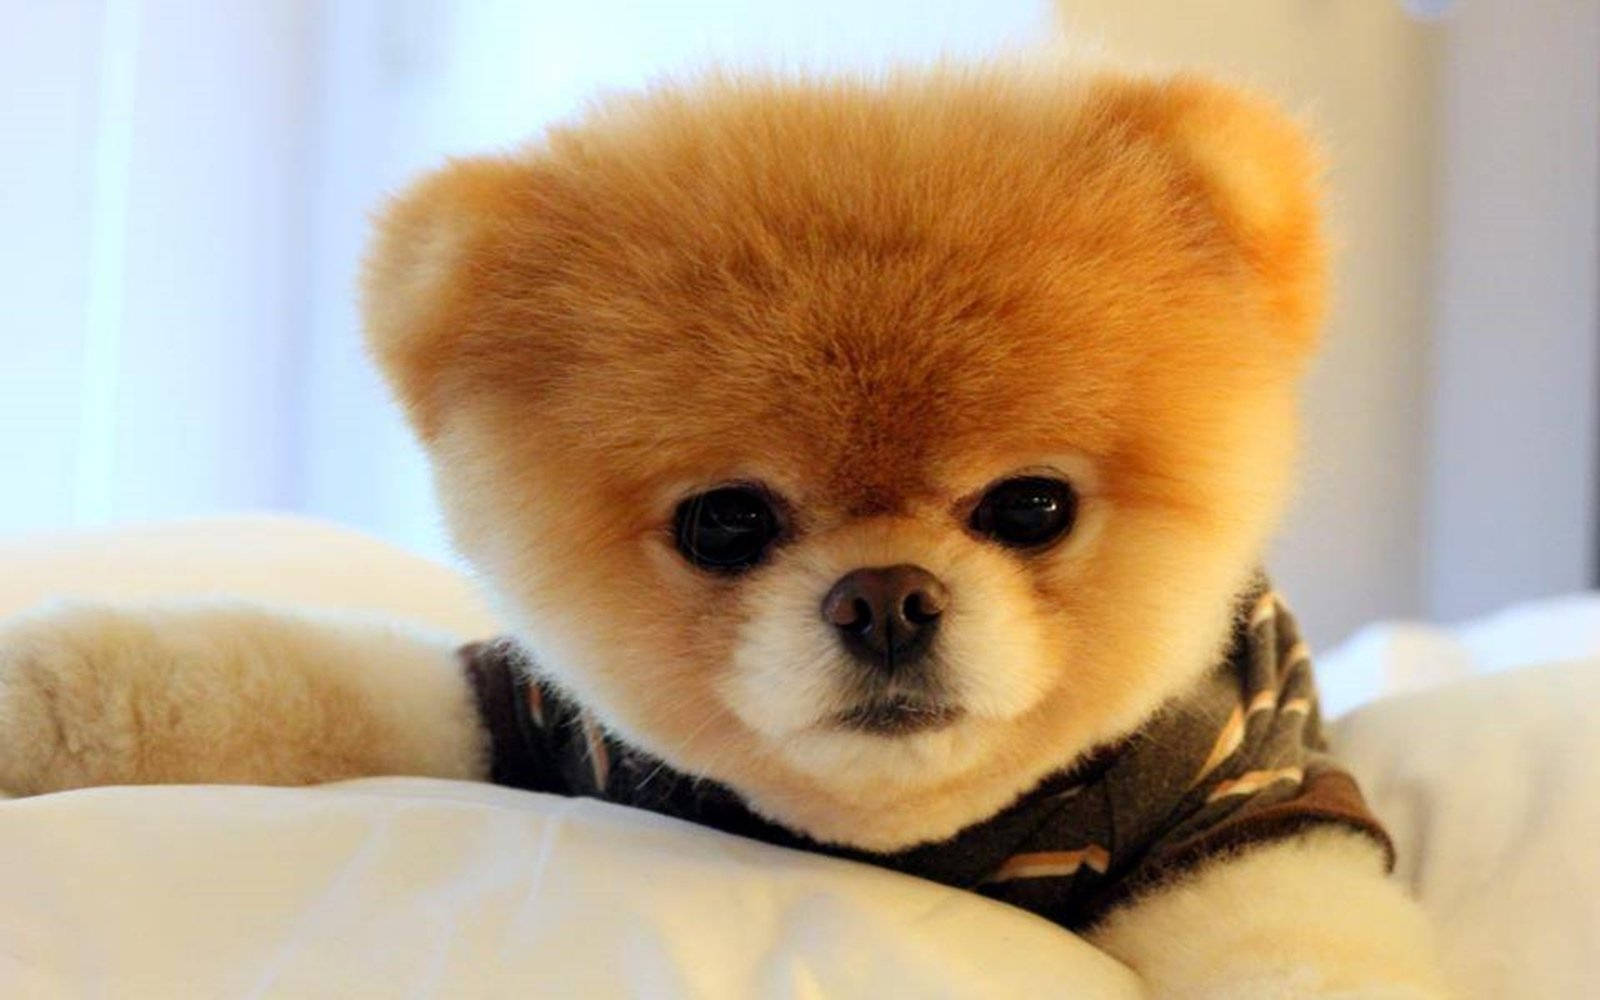 Beanie Boos-Looking Pomeranian Wallpaper